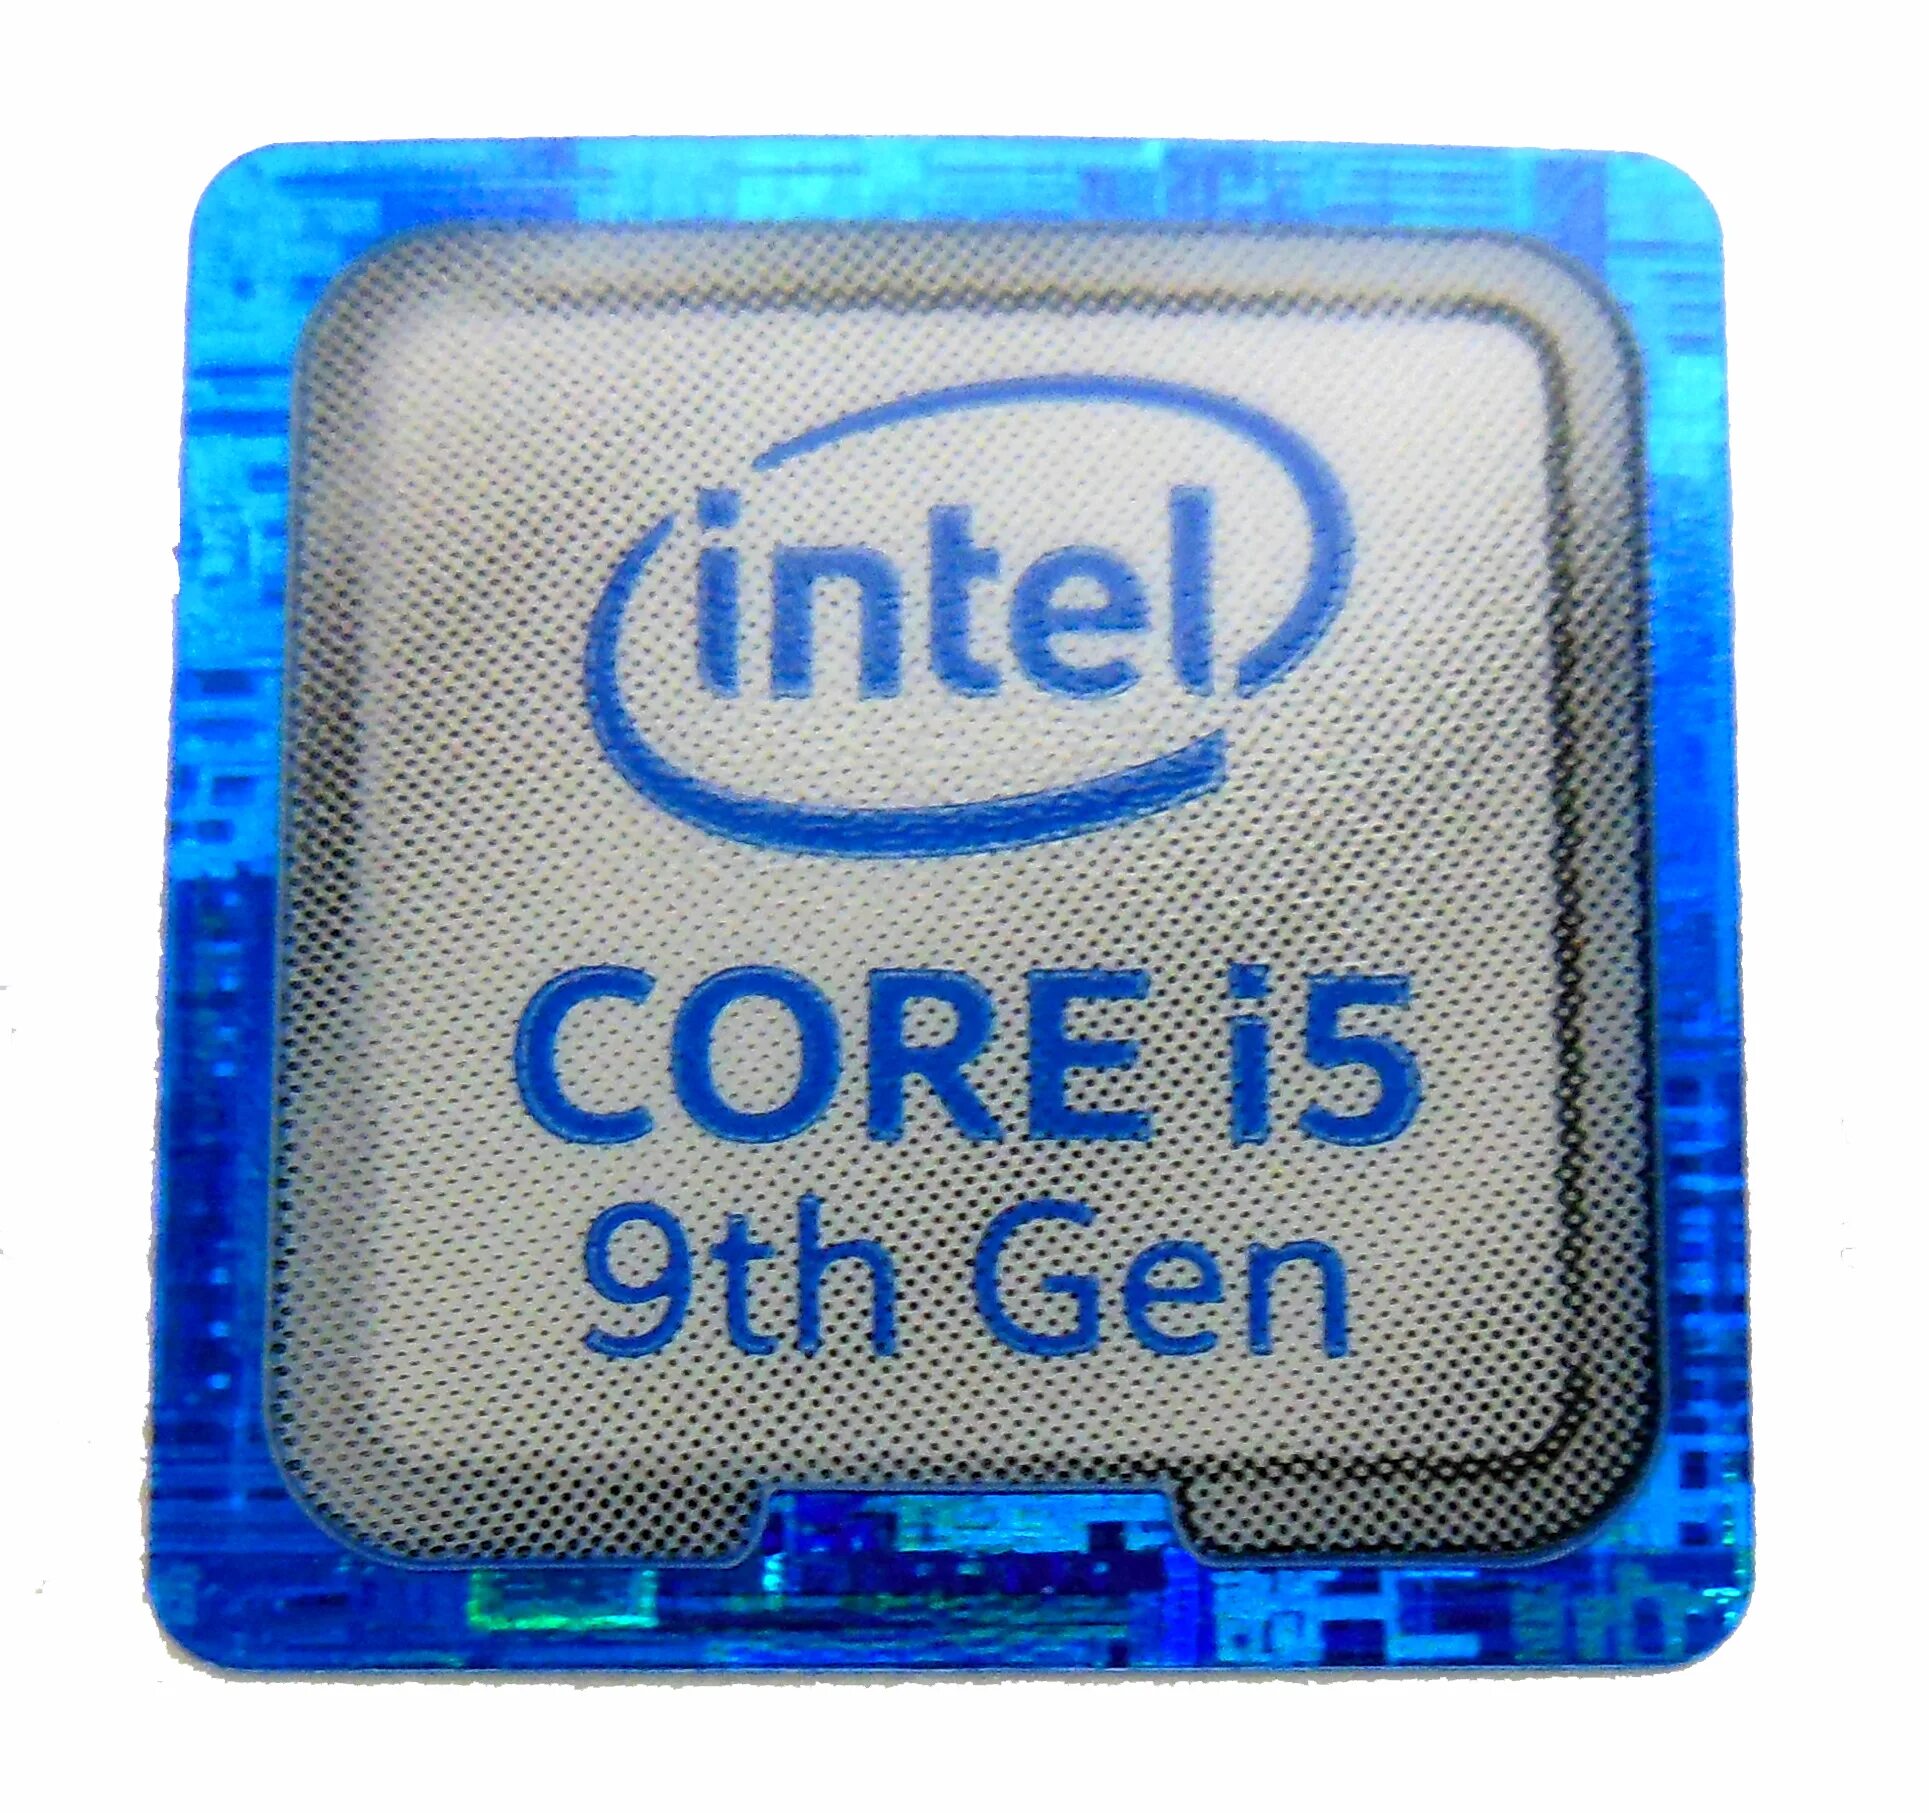 Core i3 сколько ядер. Intel Core i5. Intel-Core i713700. Intel Core i5 10th Gen. Иконки Intel Core i5.